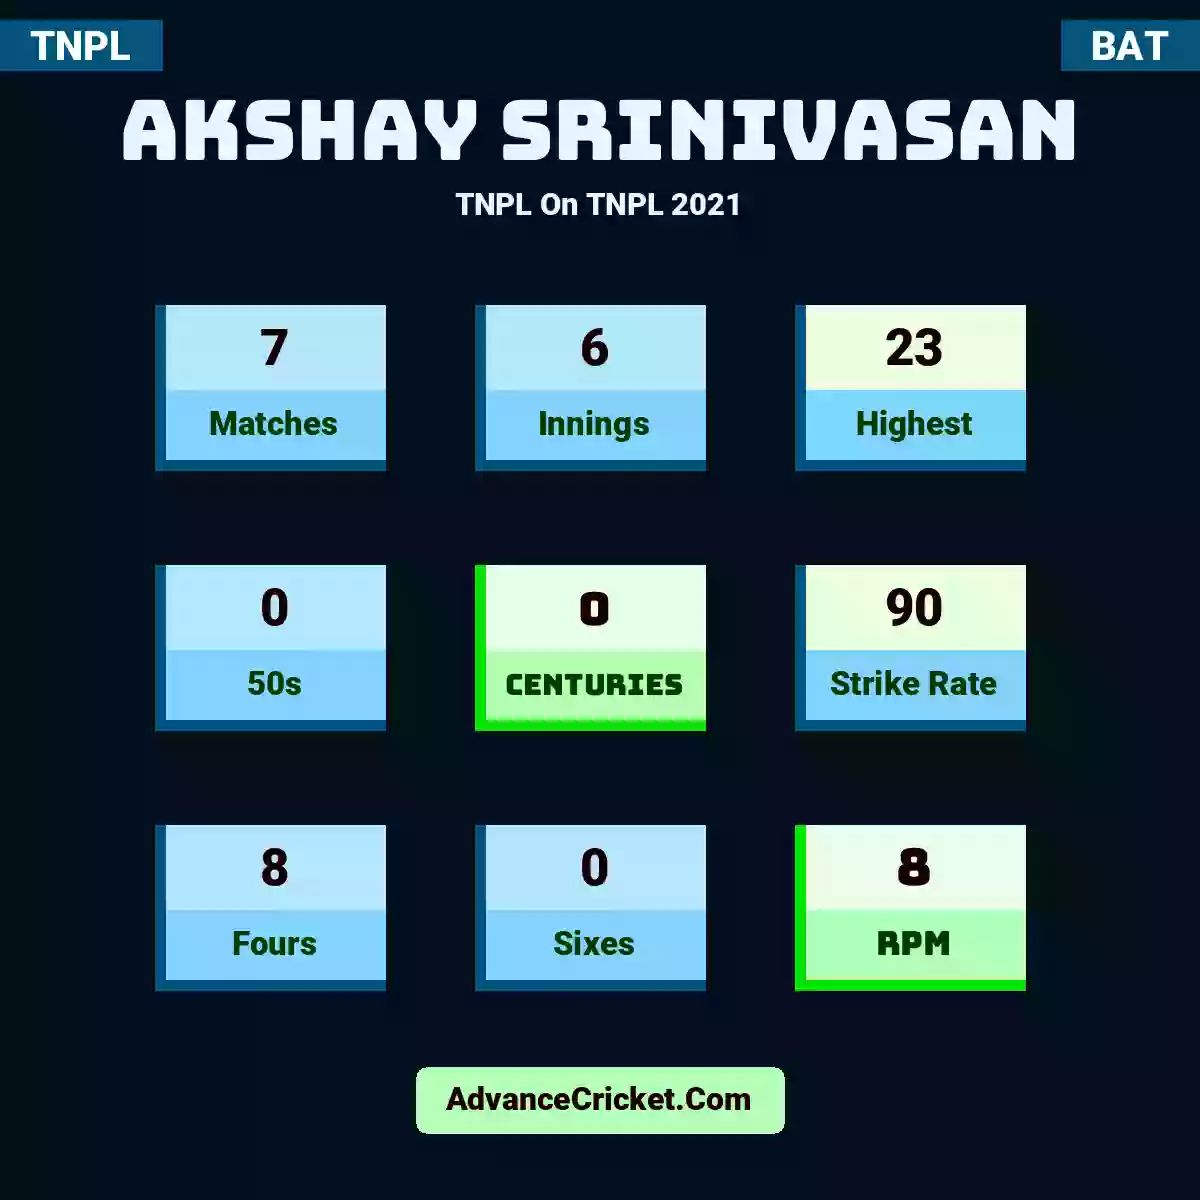 Akshay Srinivasan TNPL  On TNPL 2021, Akshay Srinivasan played 7 matches, scored 23 runs as highest, 0 half-centuries, and 0 centuries, with a strike rate of 90. A.Srinivasan hit 8 fours and 0 sixes, with an RPM of 8.